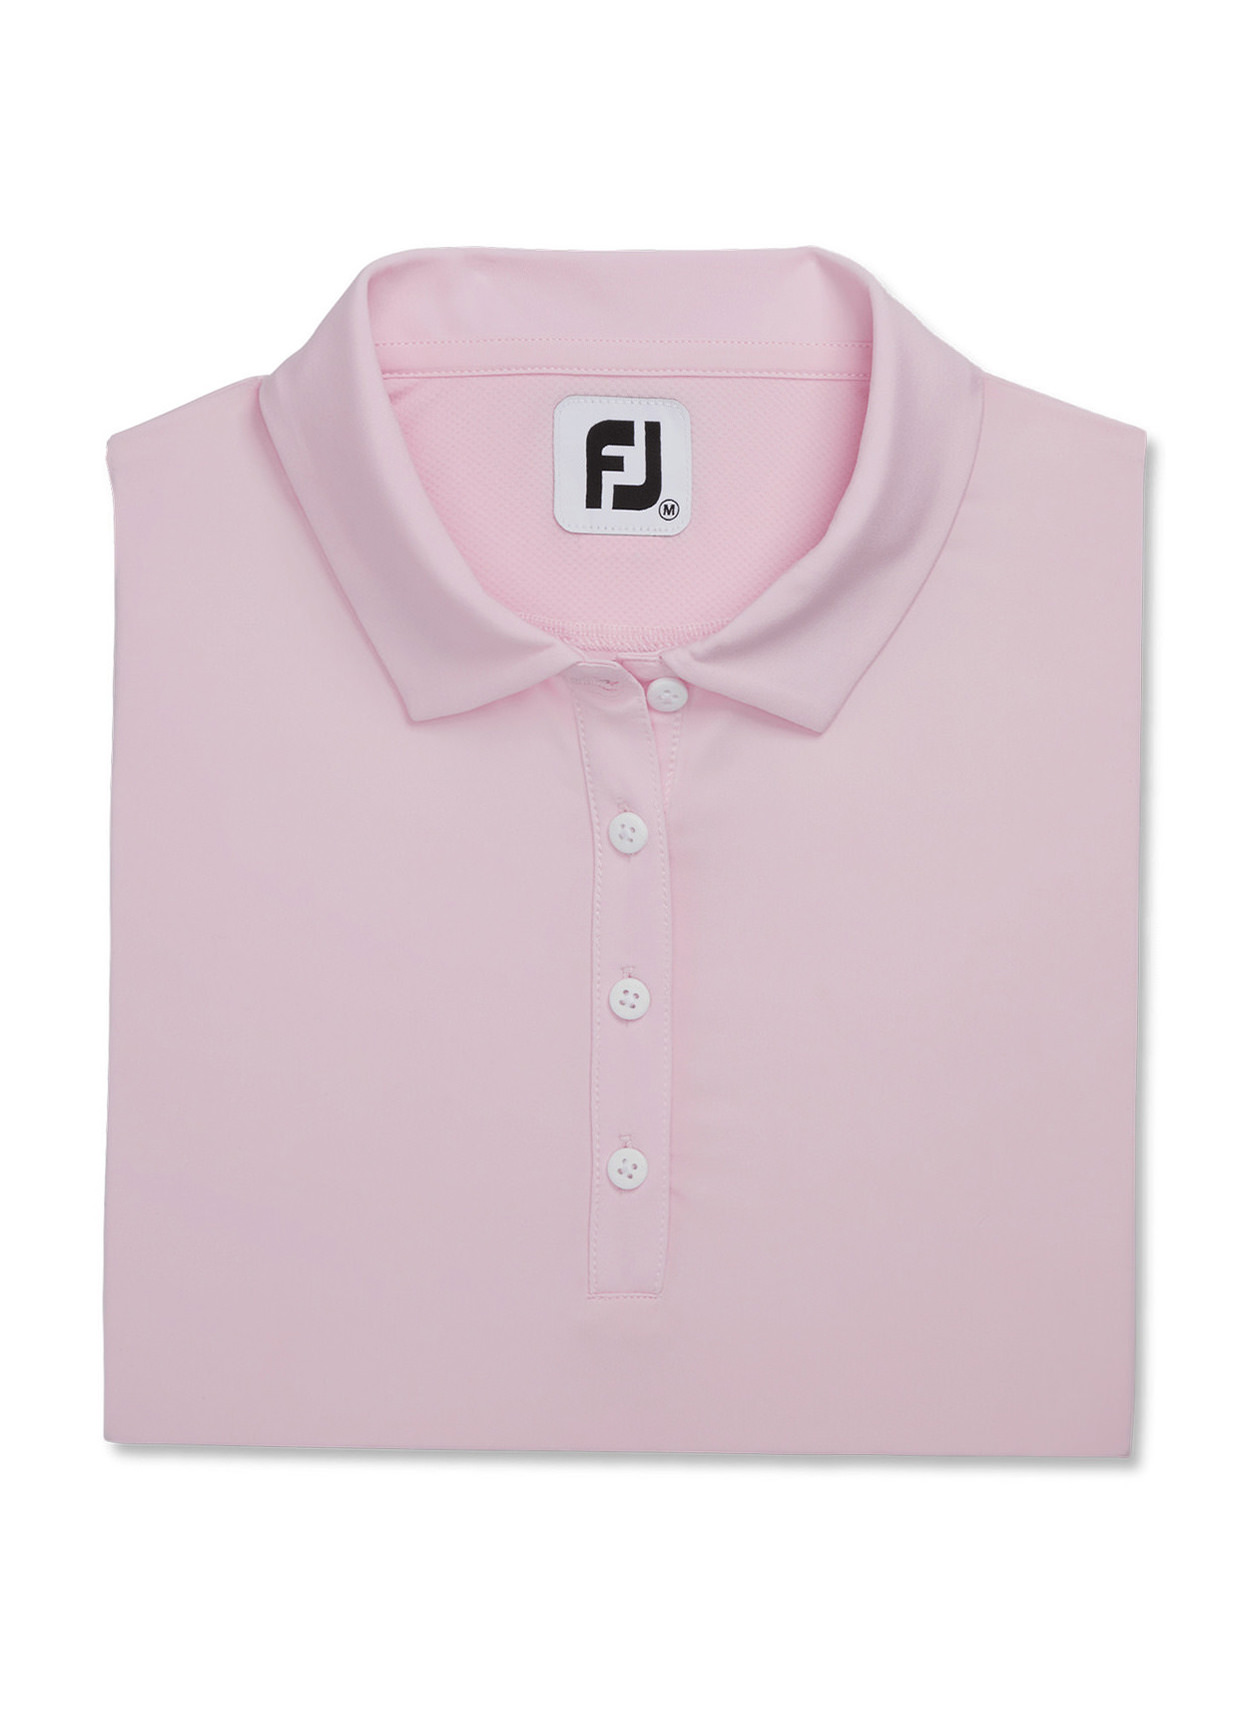 FootJoy Women's Pink Long-Sleeved Sun Protection Shirt